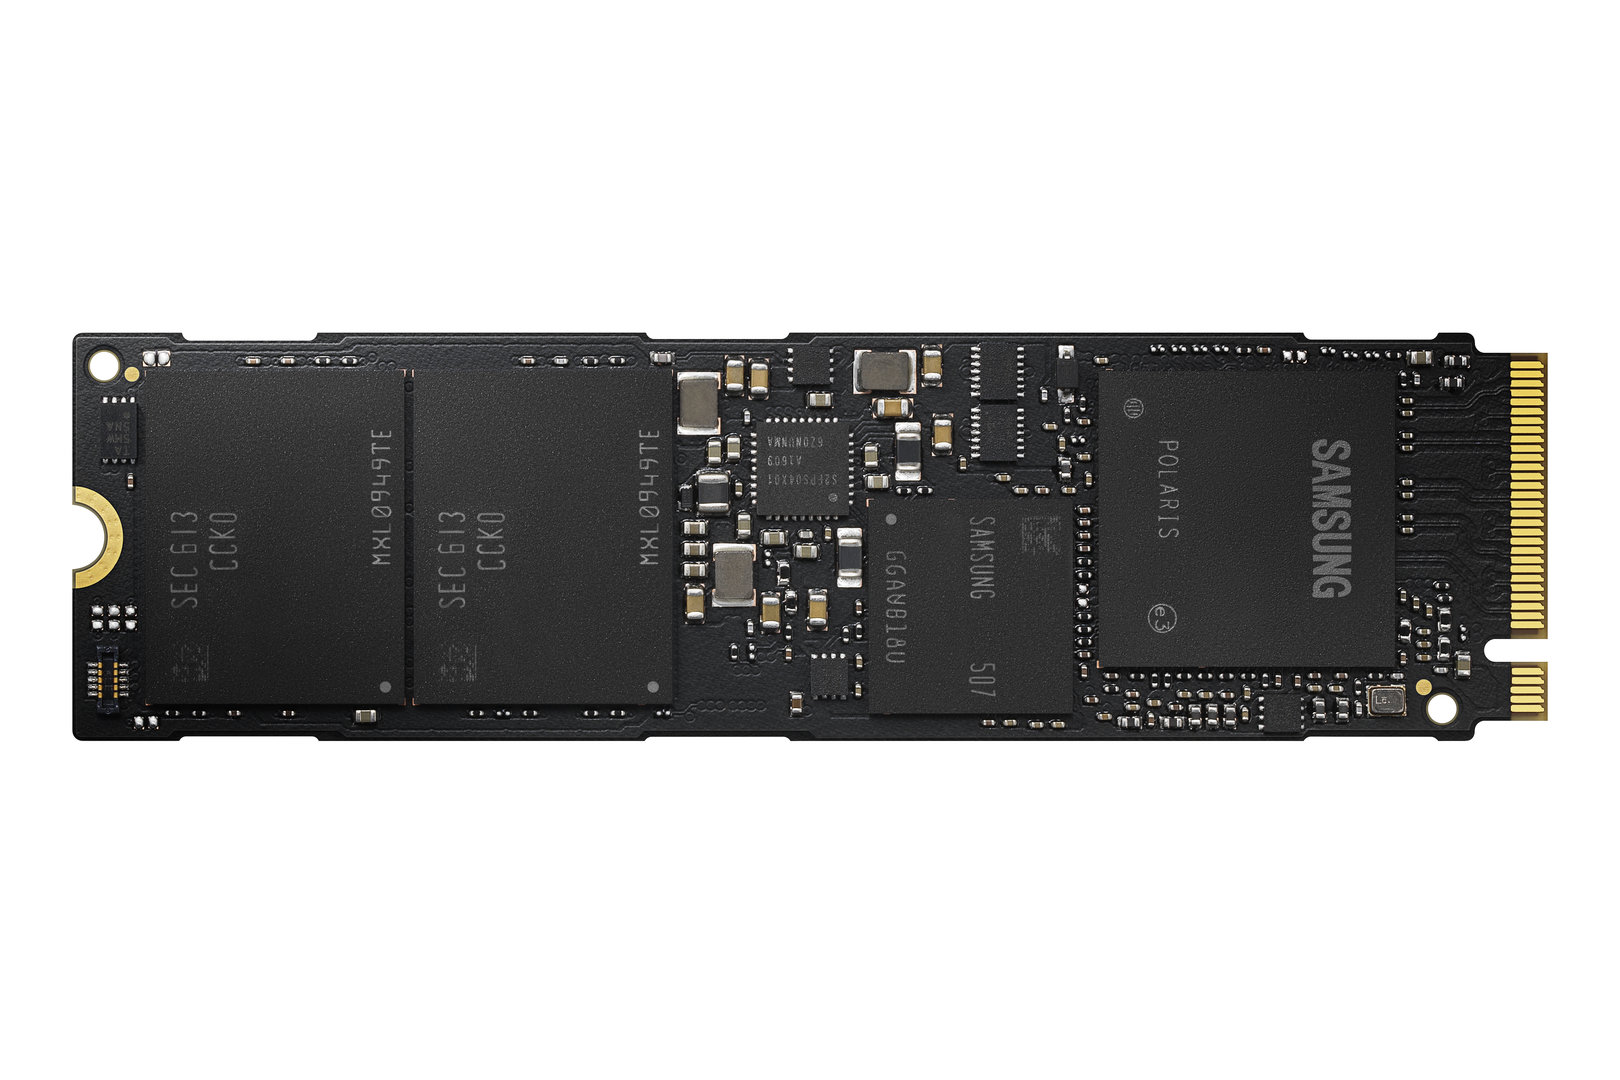 Samsung SSD 960 Evo